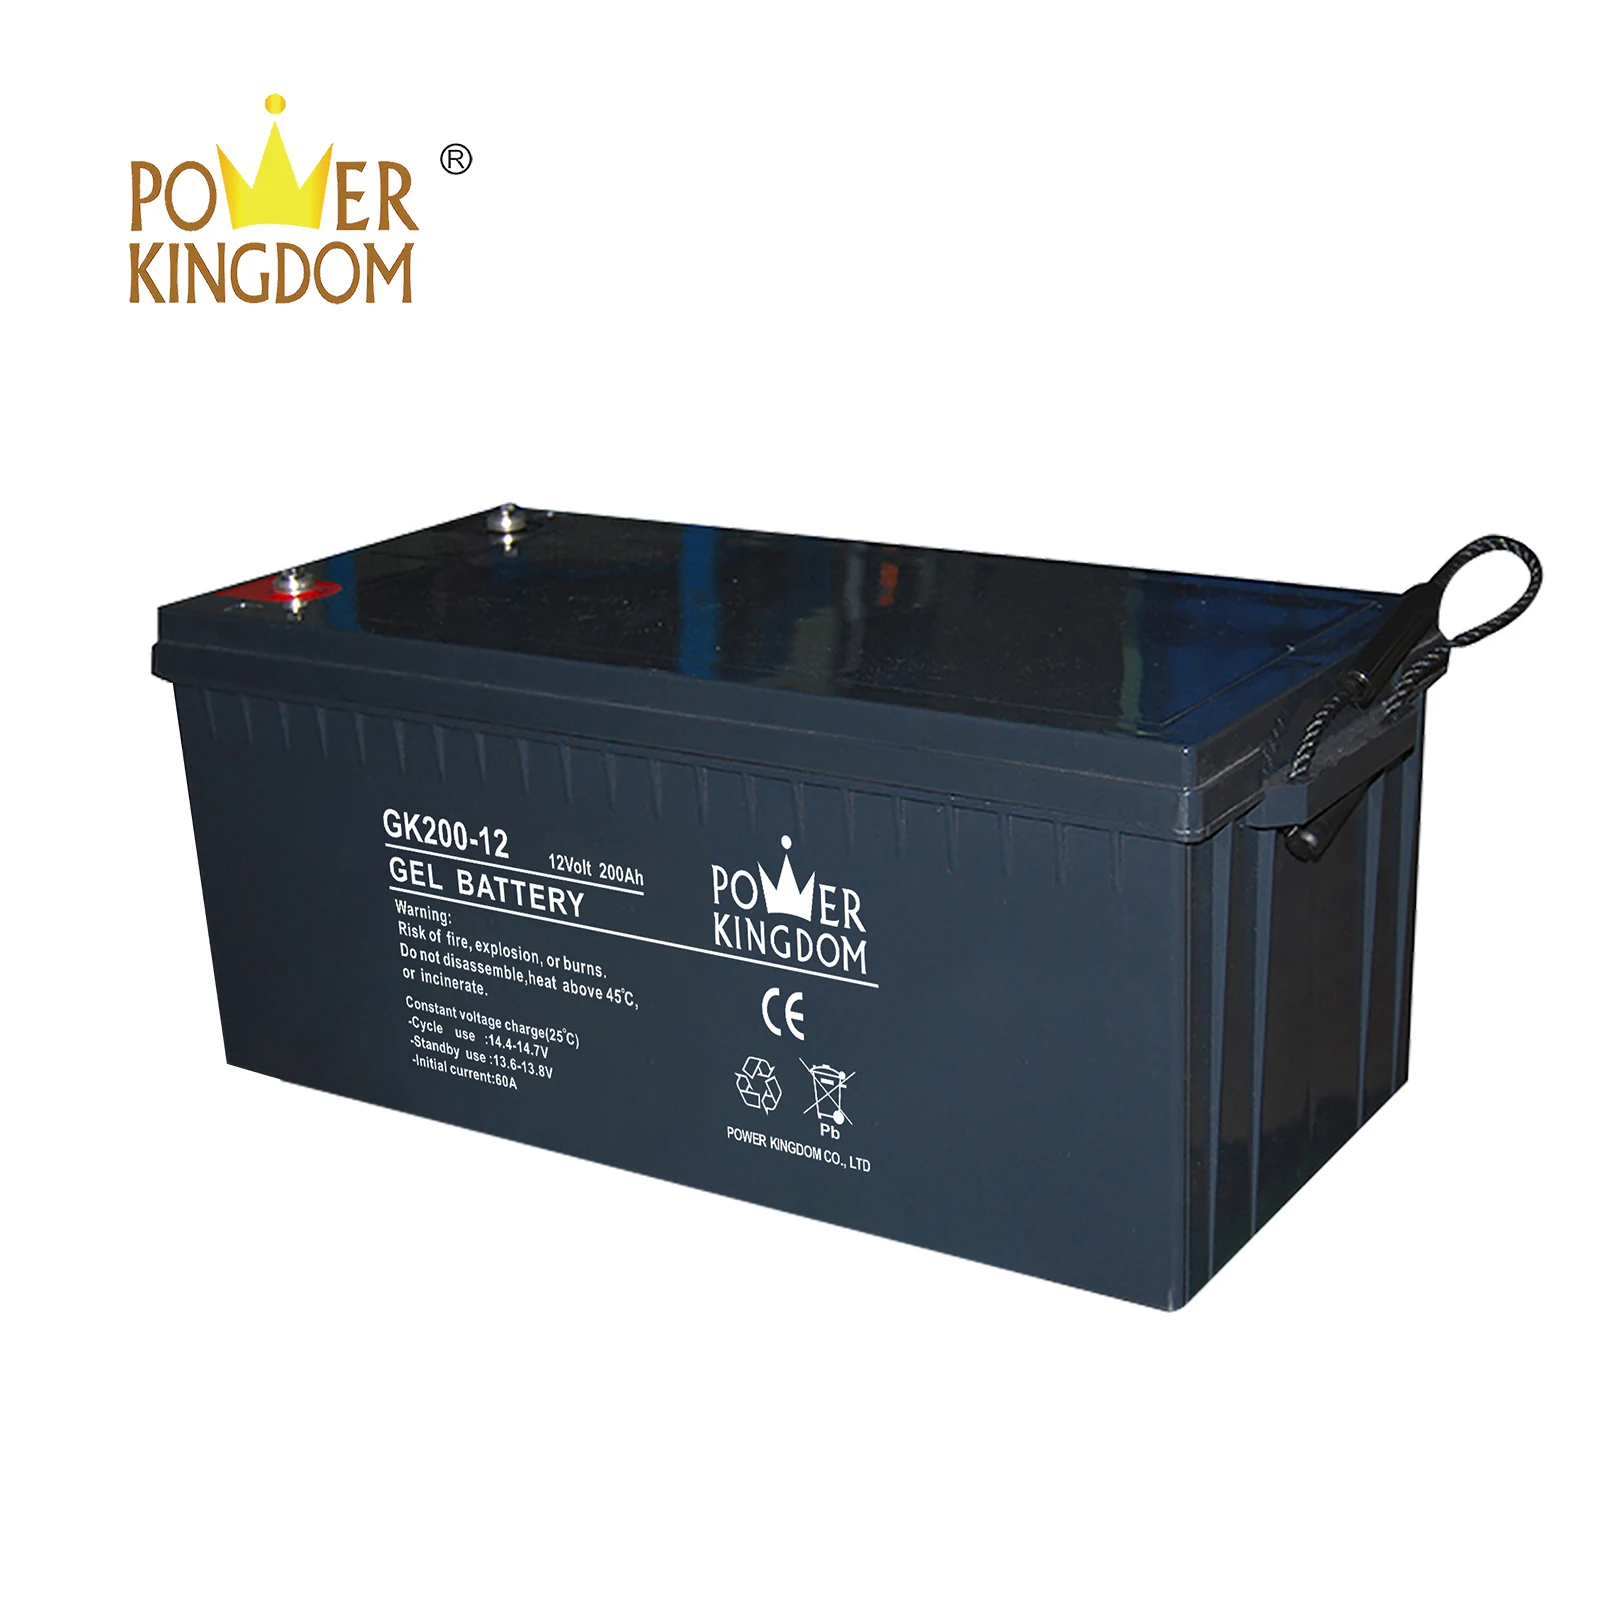 Power Kingdom Top lead peroxide battery company wind power system